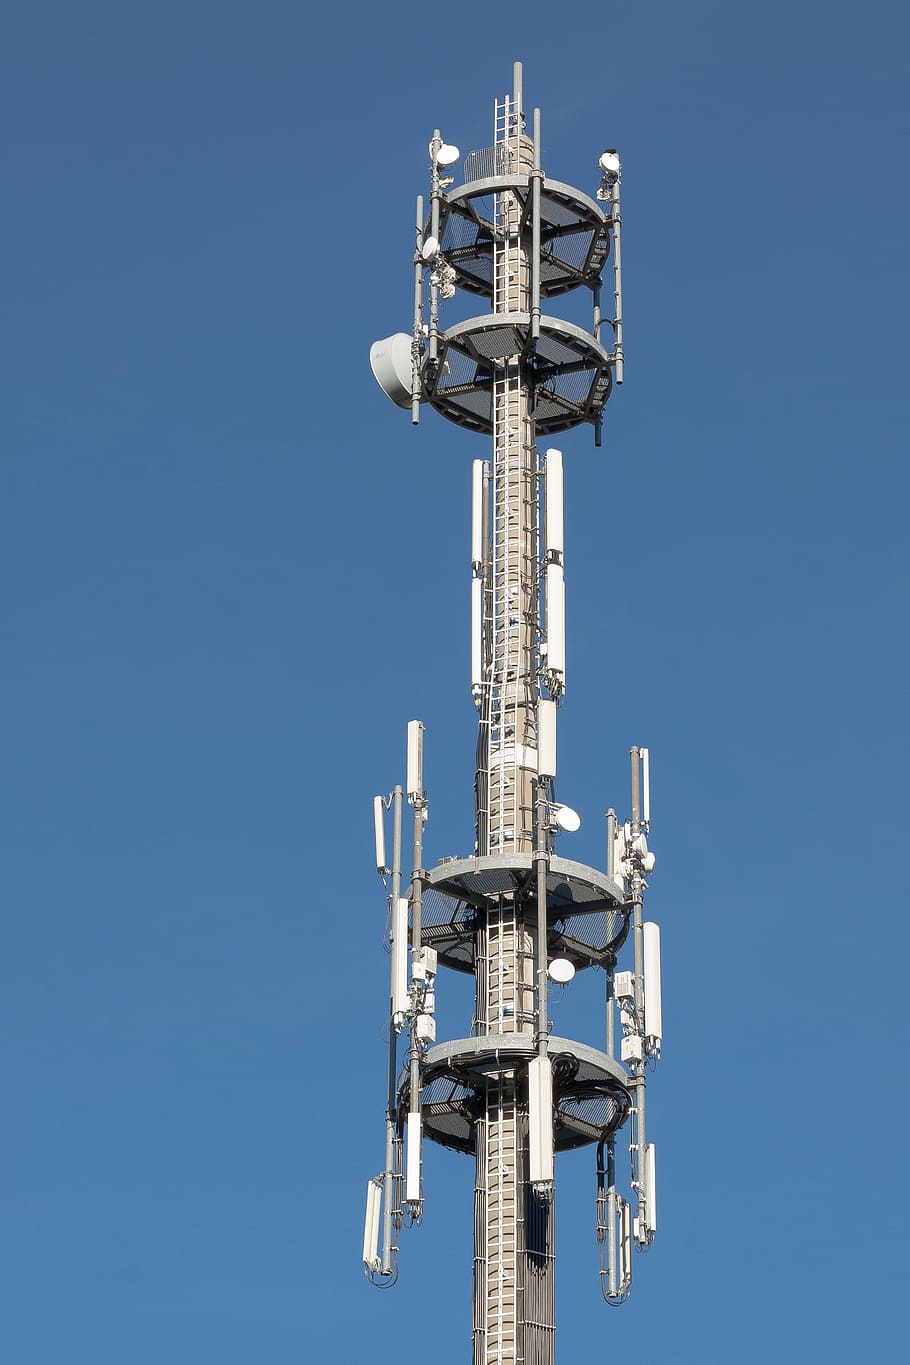 remote login mast, radio mast, communication, antenna, reception, news, sky, wireless technology, radio relay, mobile network